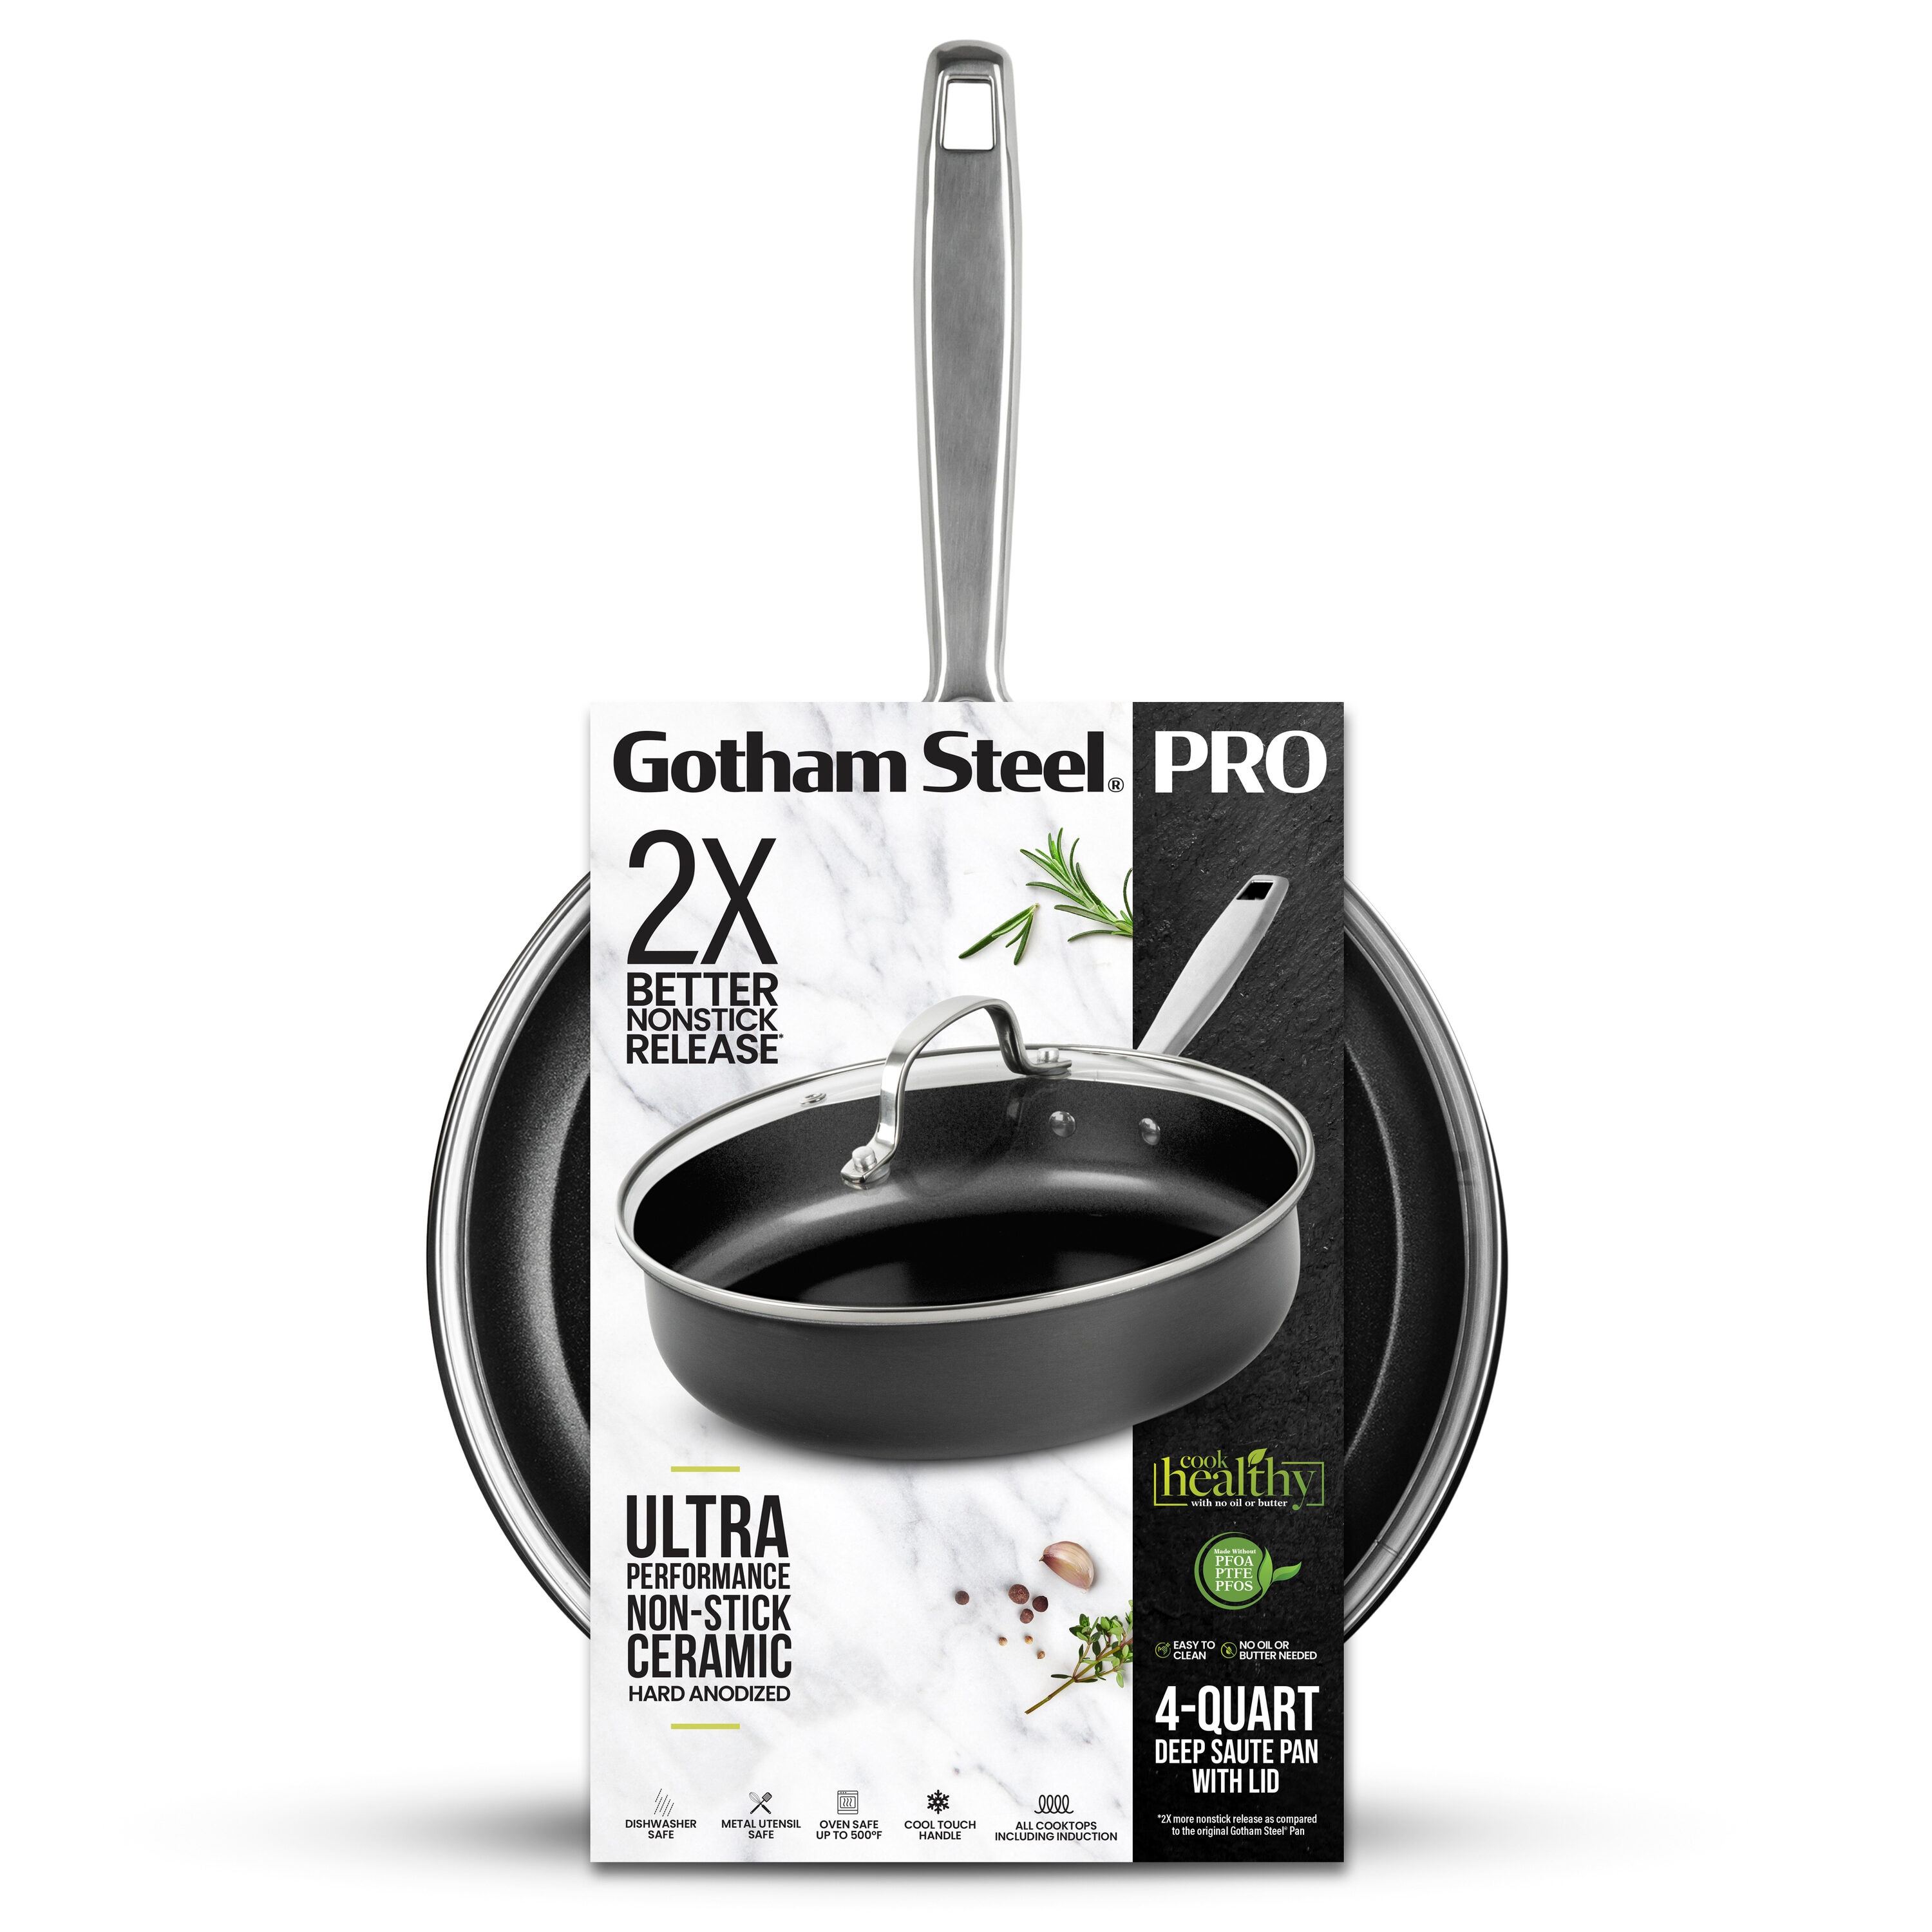 Gotham Steel Pro Ultra Ceramic 4 qt. Deep Saute Pan with Lid in Black